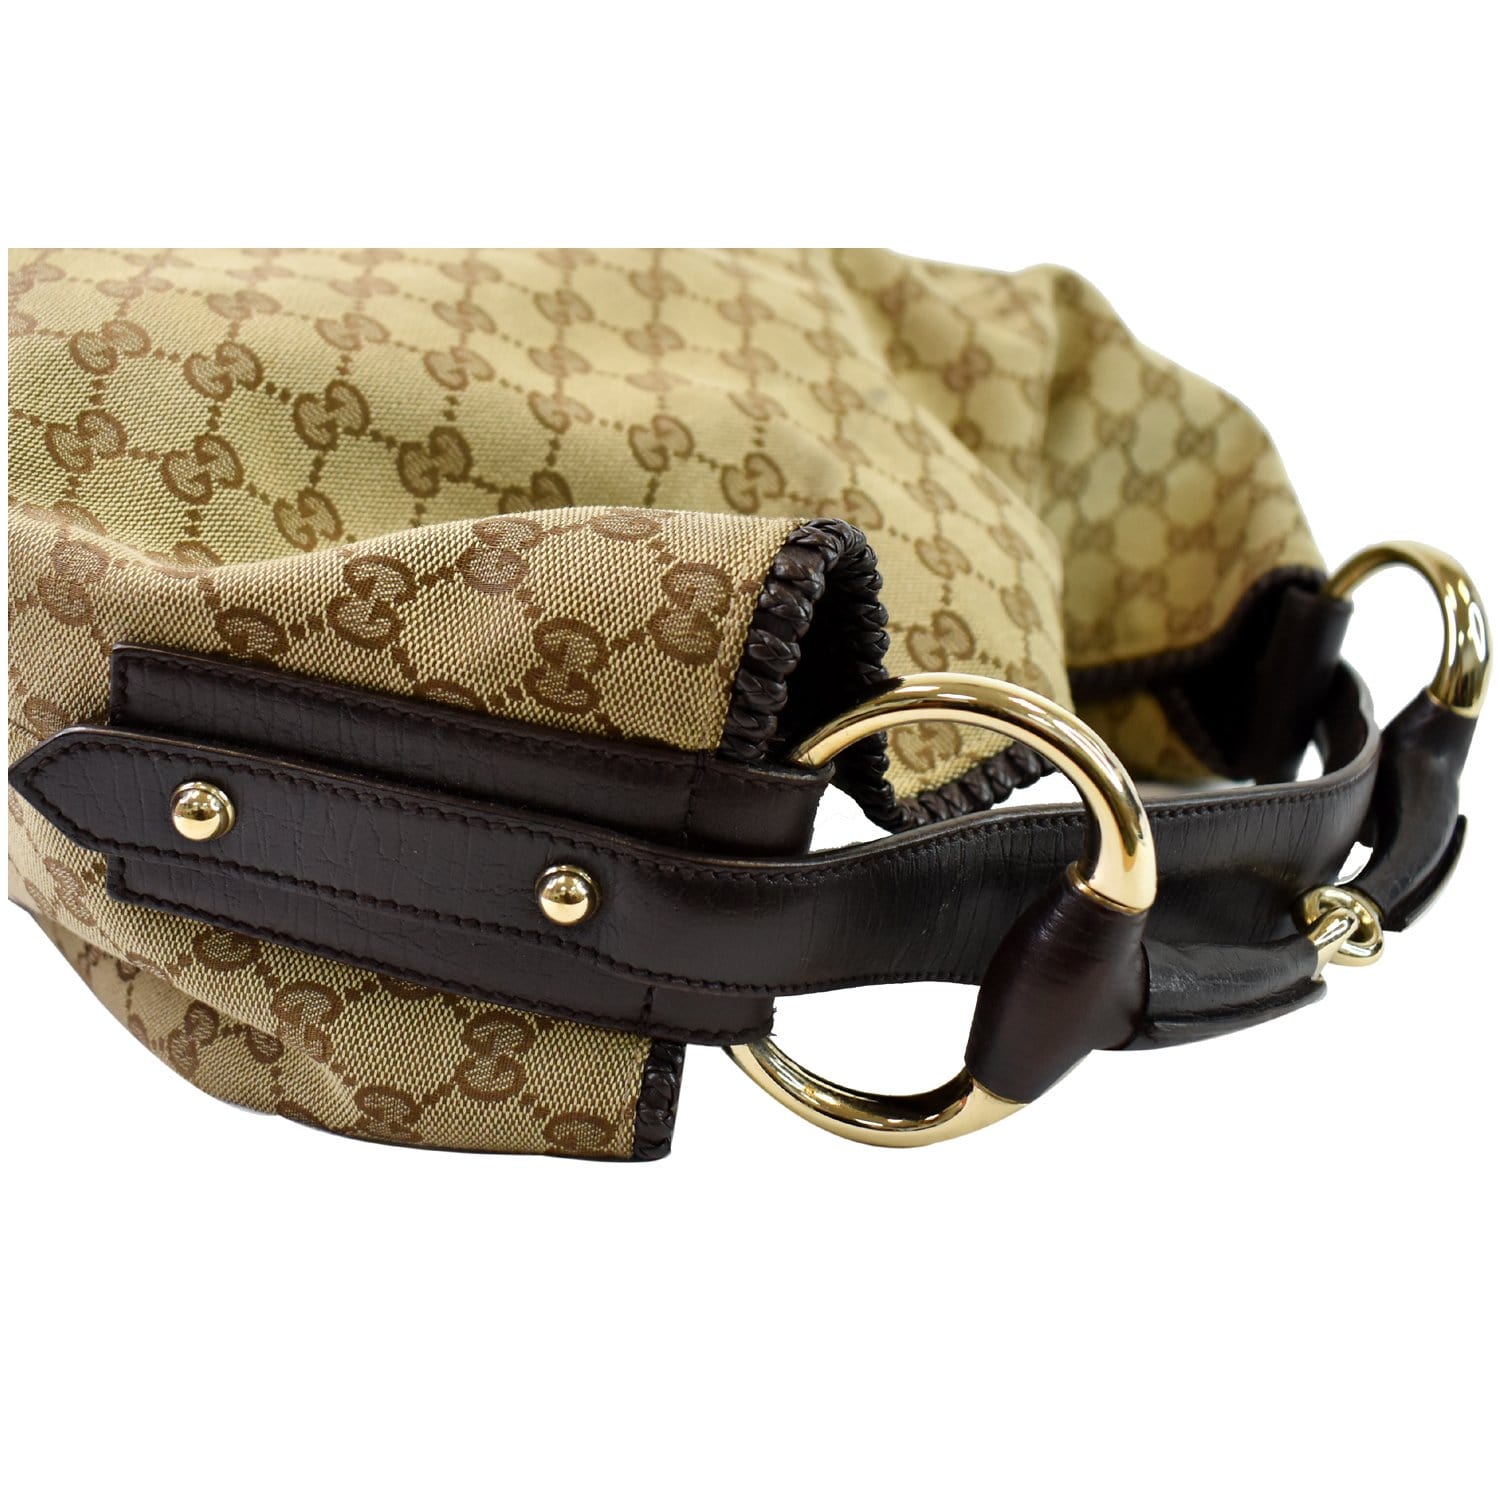 Gucci Horsebit Hobo Bag Vintage for Sale in Dallas, TX - OfferUp